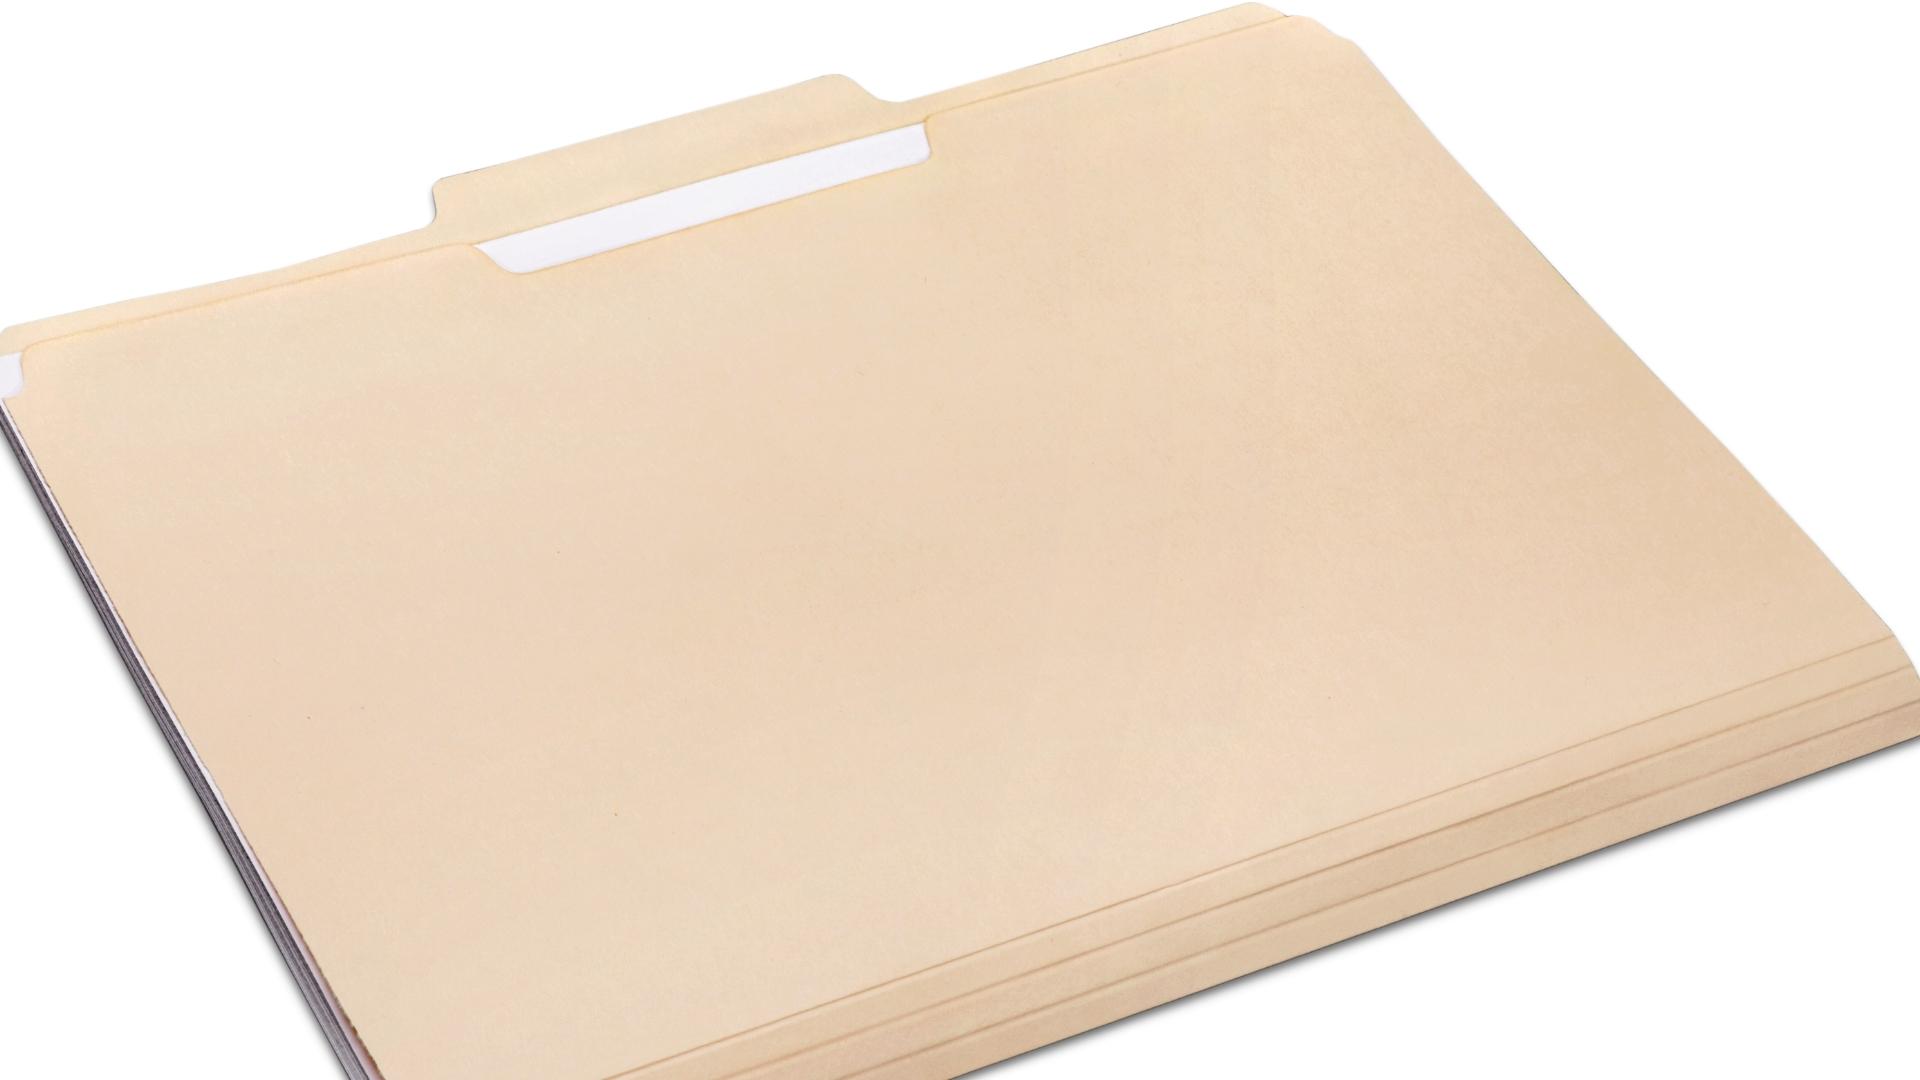 Documents organized in a file folder